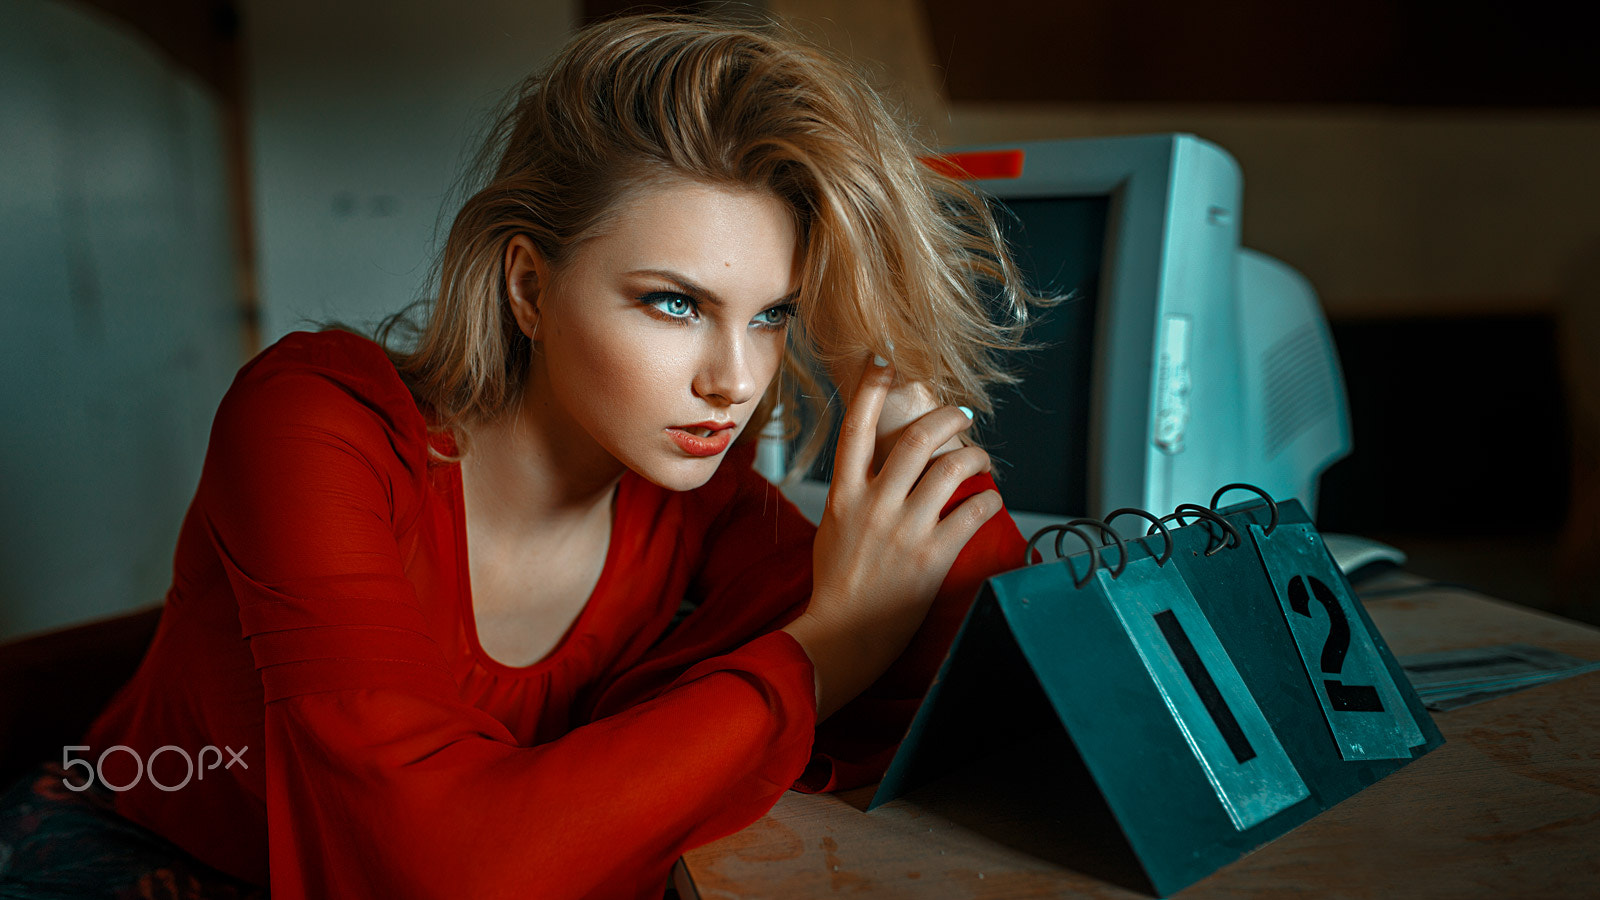 Women Damian Piorko Blonde Portrait Looking Away 500px Watermarked Red Shirt 1600x900